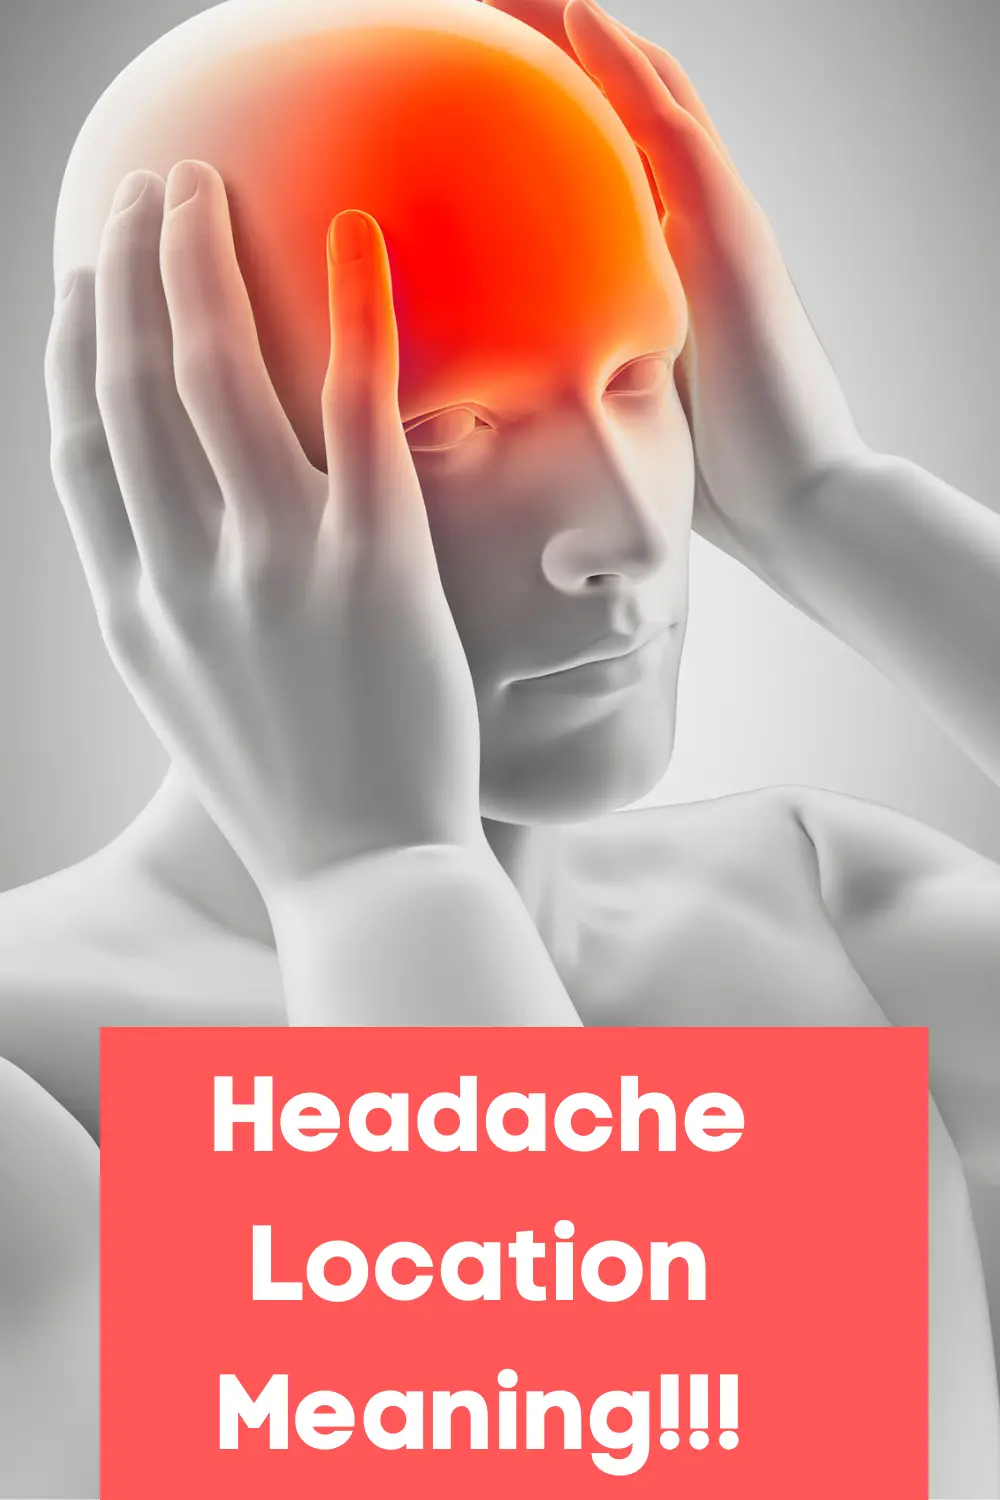 Headache location meaning